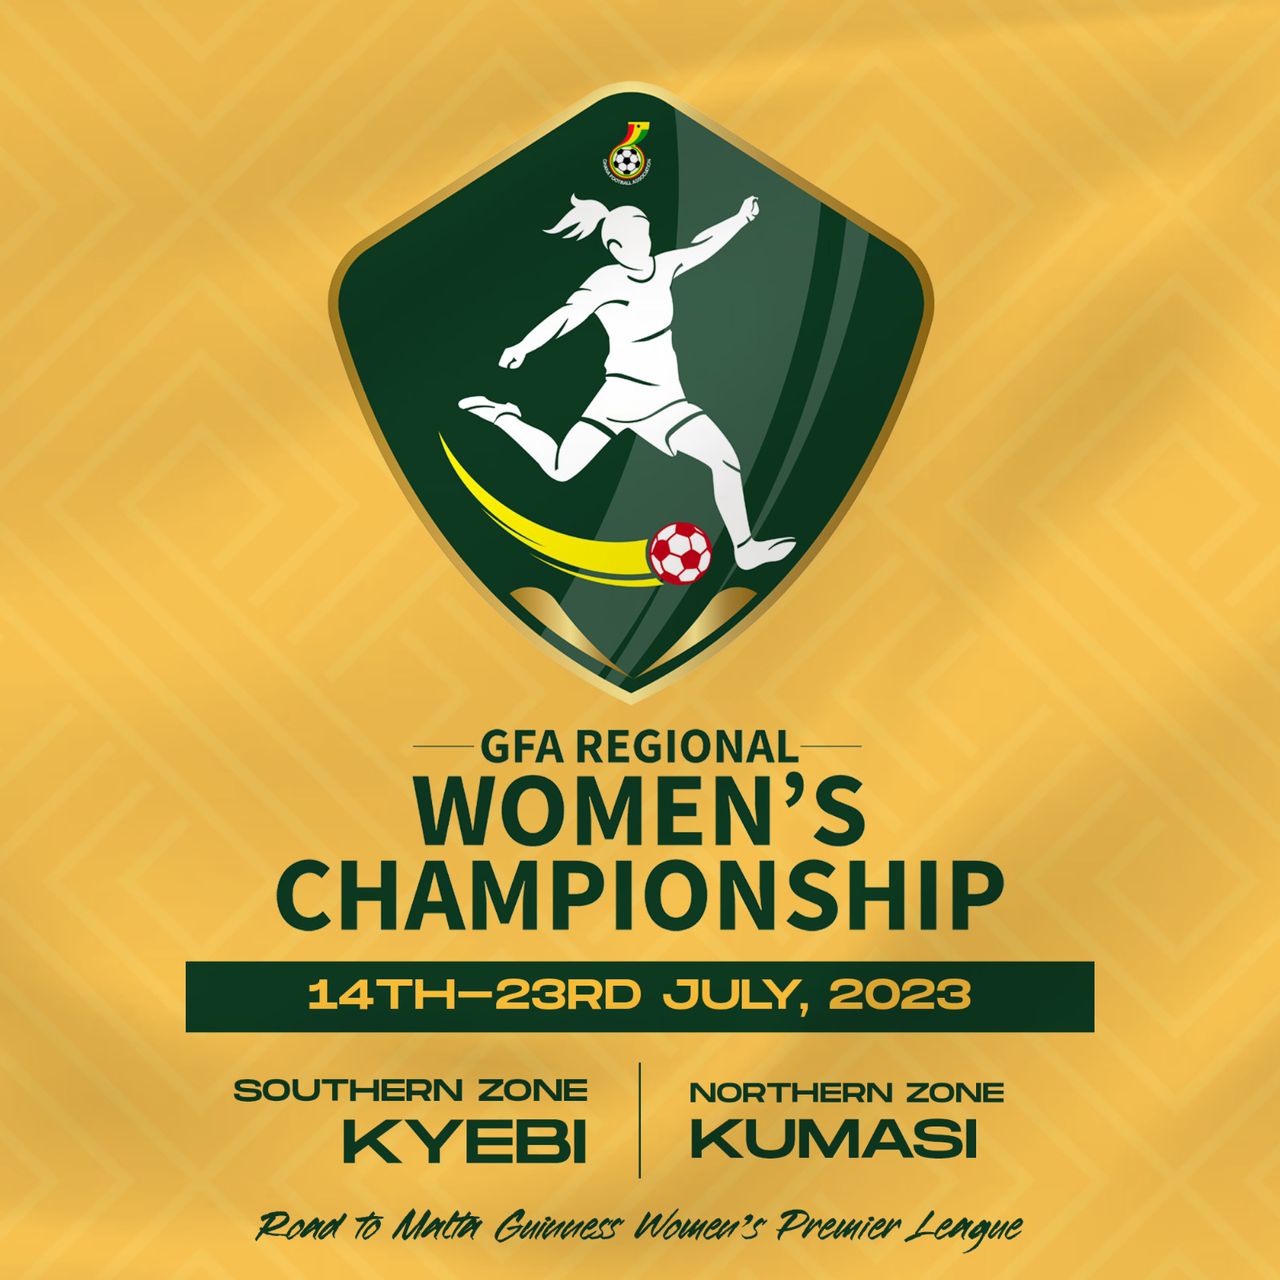 Regional Women’s Championship kicks off July 14